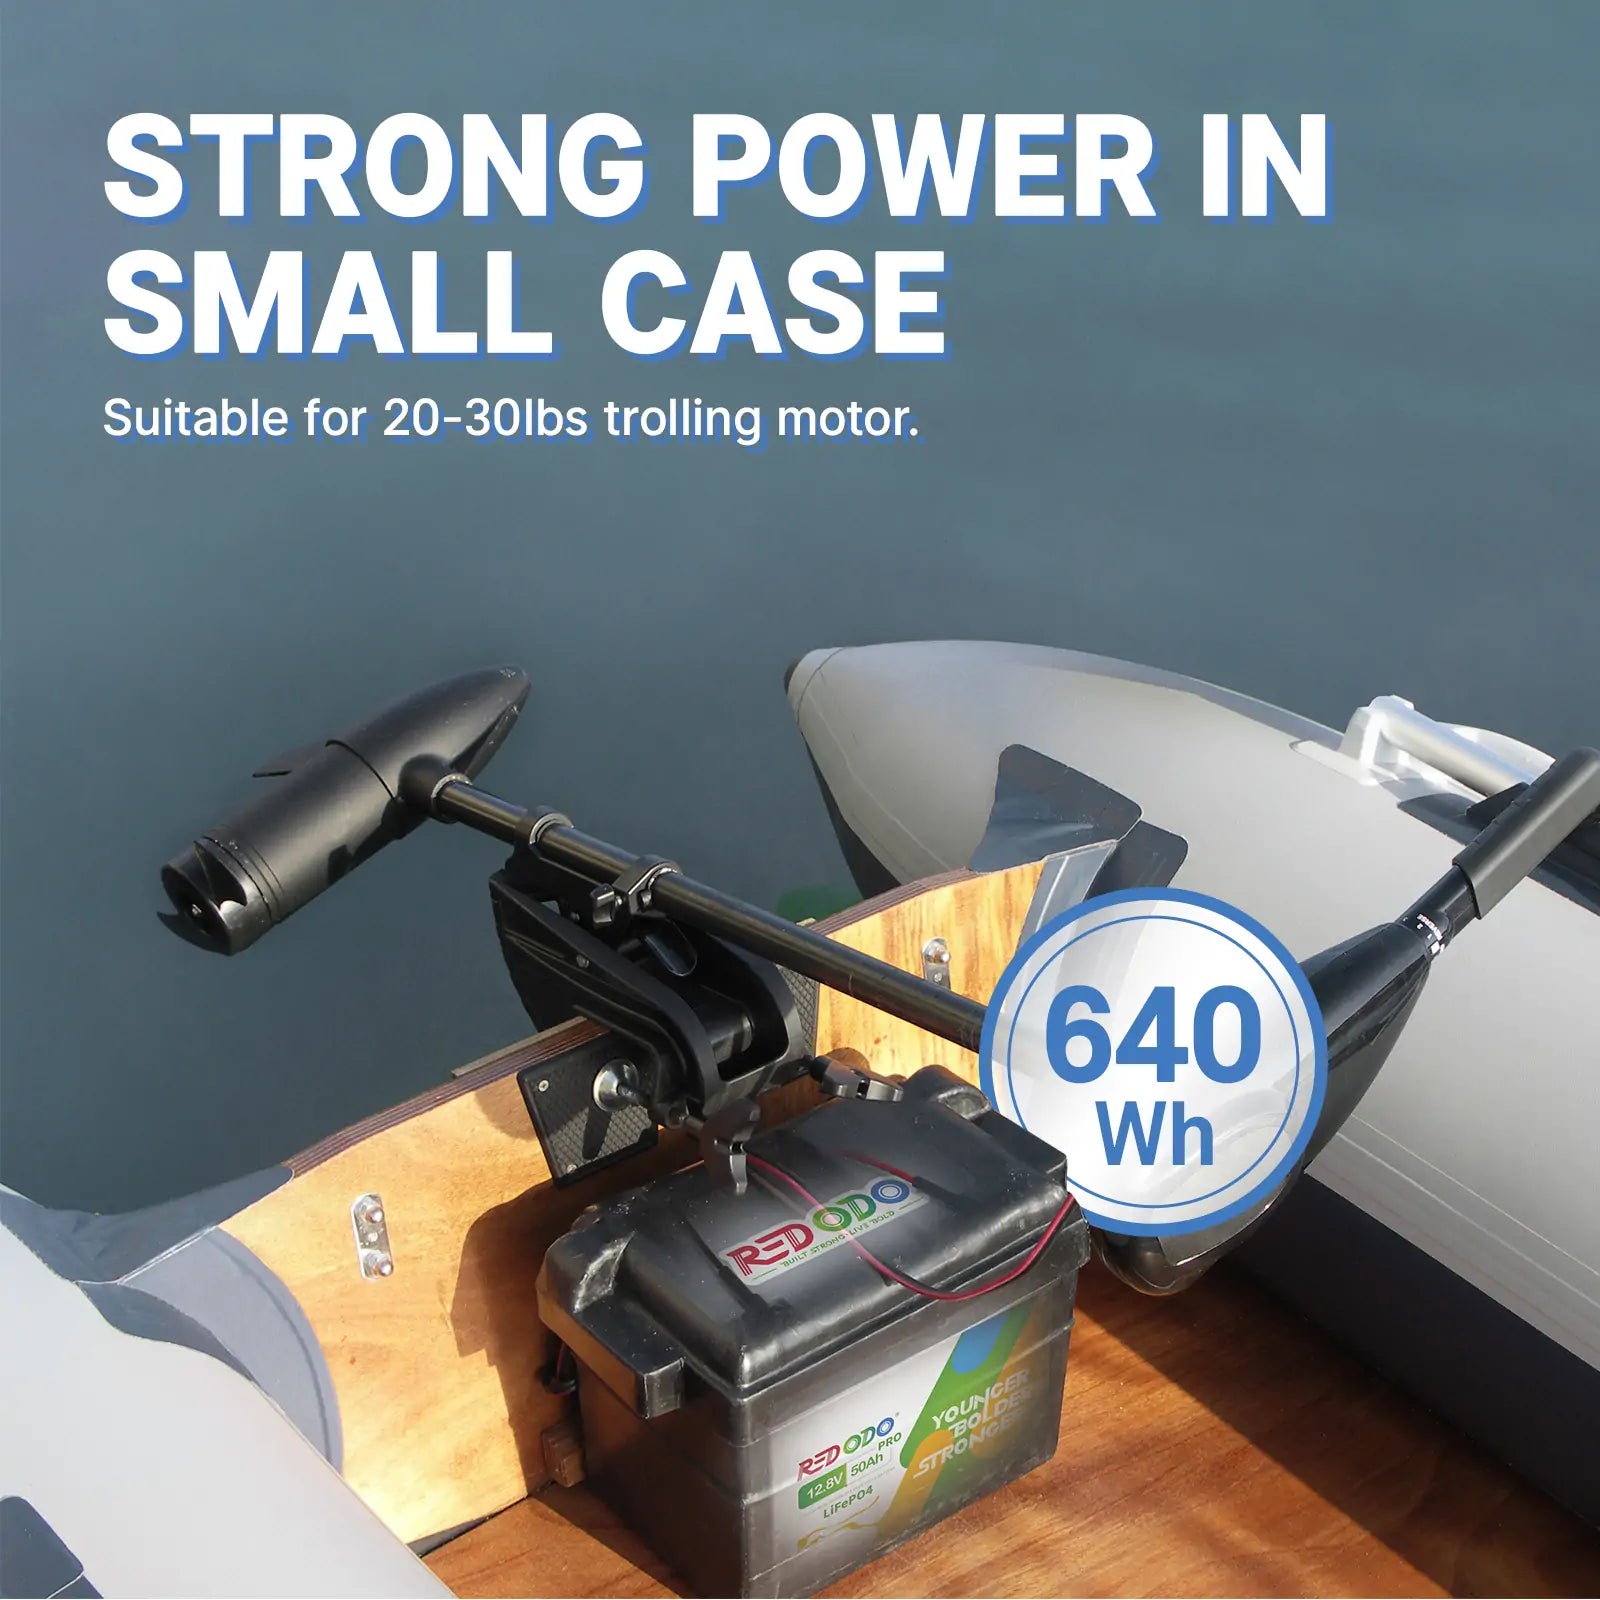 Redodo 12V 50Ah Lithium Battery: Portable Lightweight Power Bank